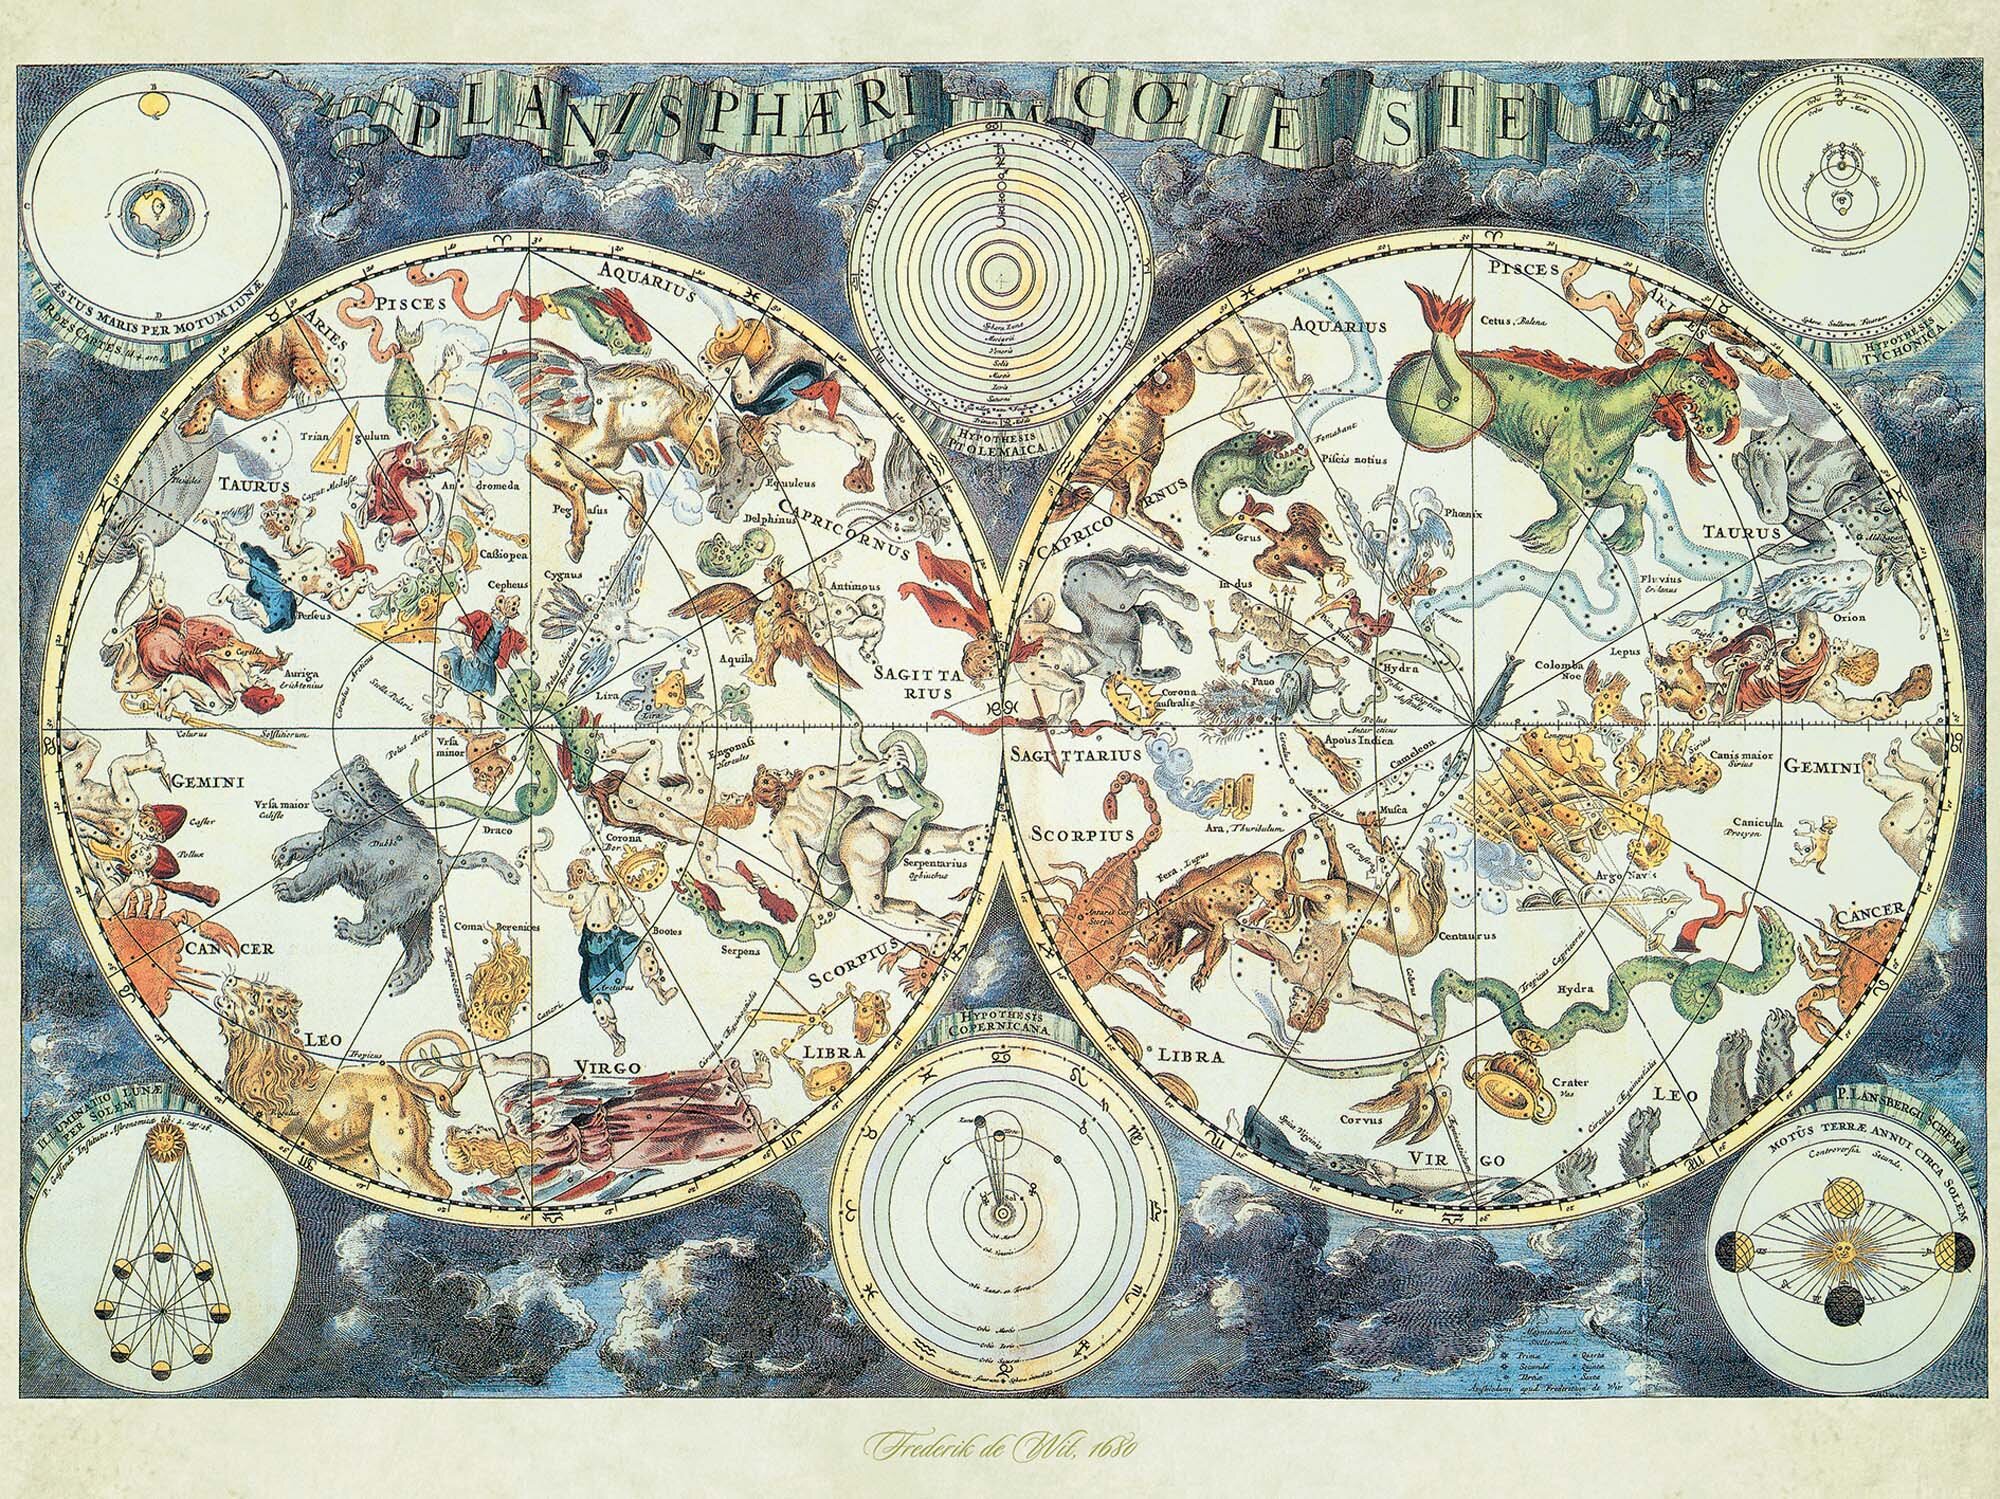 Ravensburger Puslespill, Worldmap of Fantastical Beasts 1500 brikker